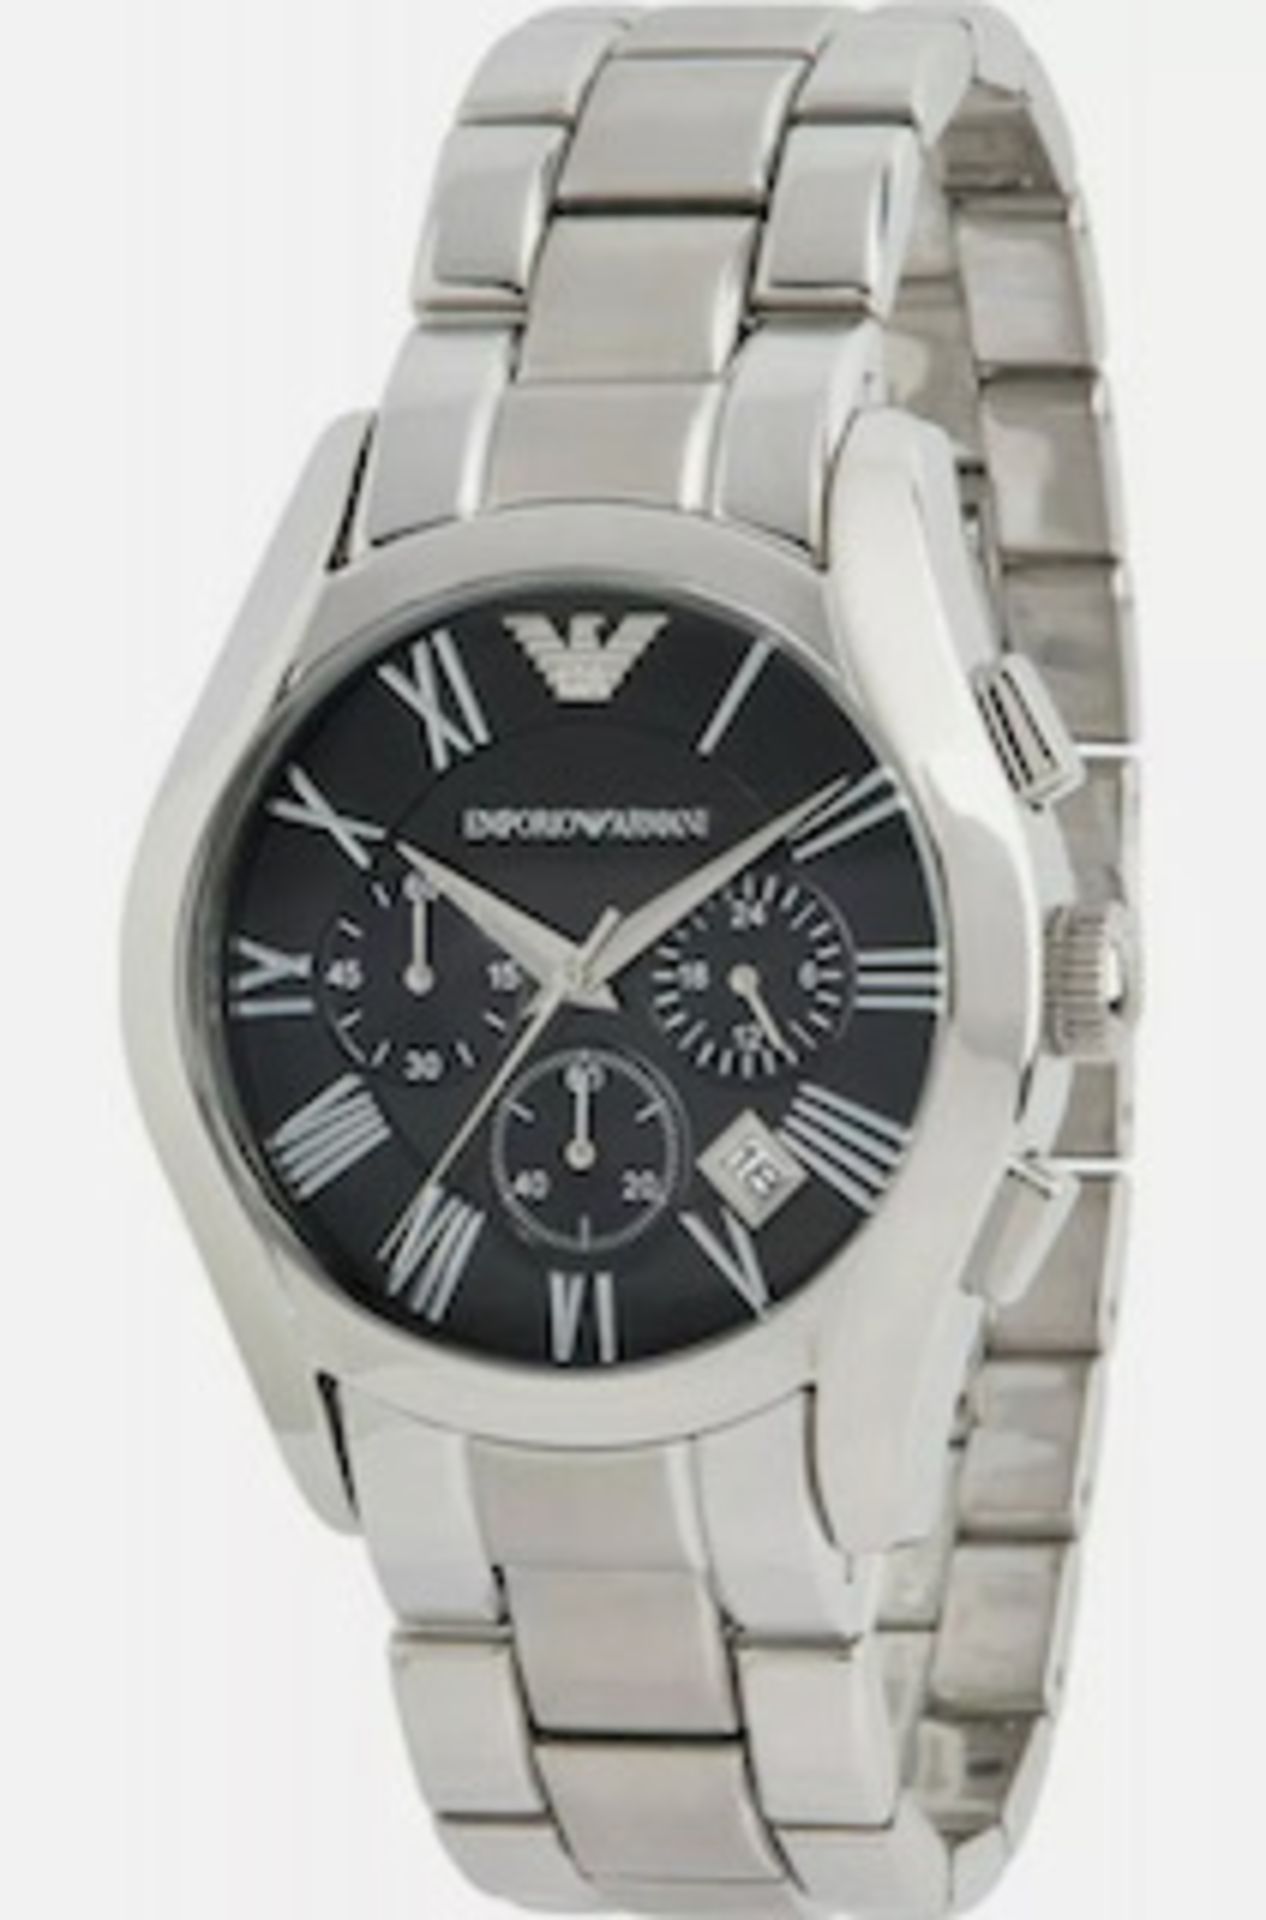 Emporio Armani AR0673 Men's Black Dial Silver Bracelet Quartz Chronograph Watch - Image 5 of 8